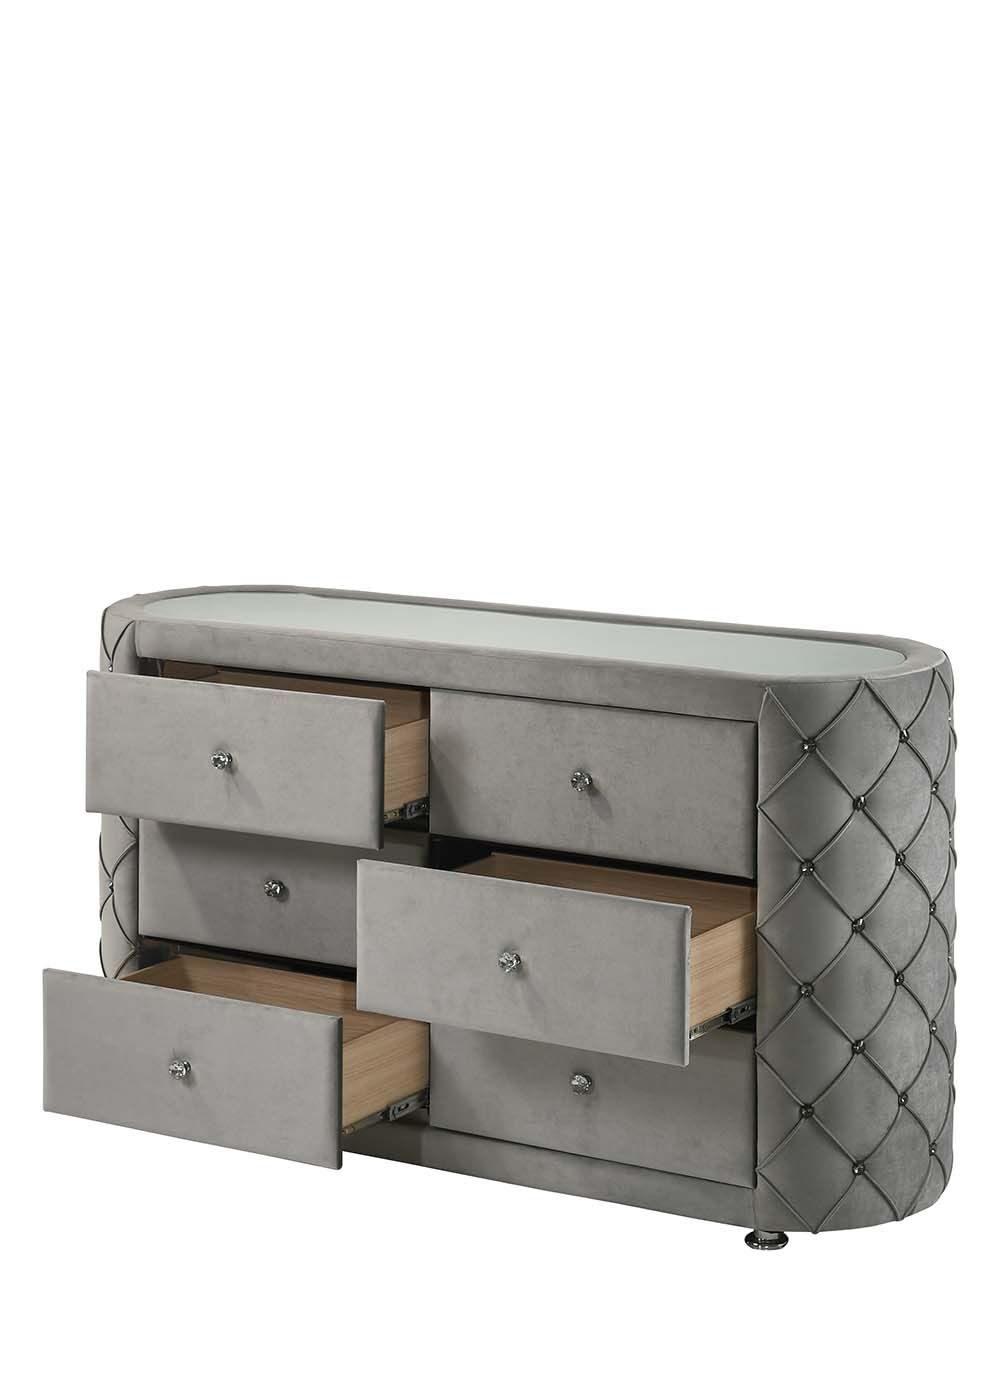 

    
Gray Color Crown Design Bedroom Set by Acme Furniture Perine BD01062Q-5pcs
